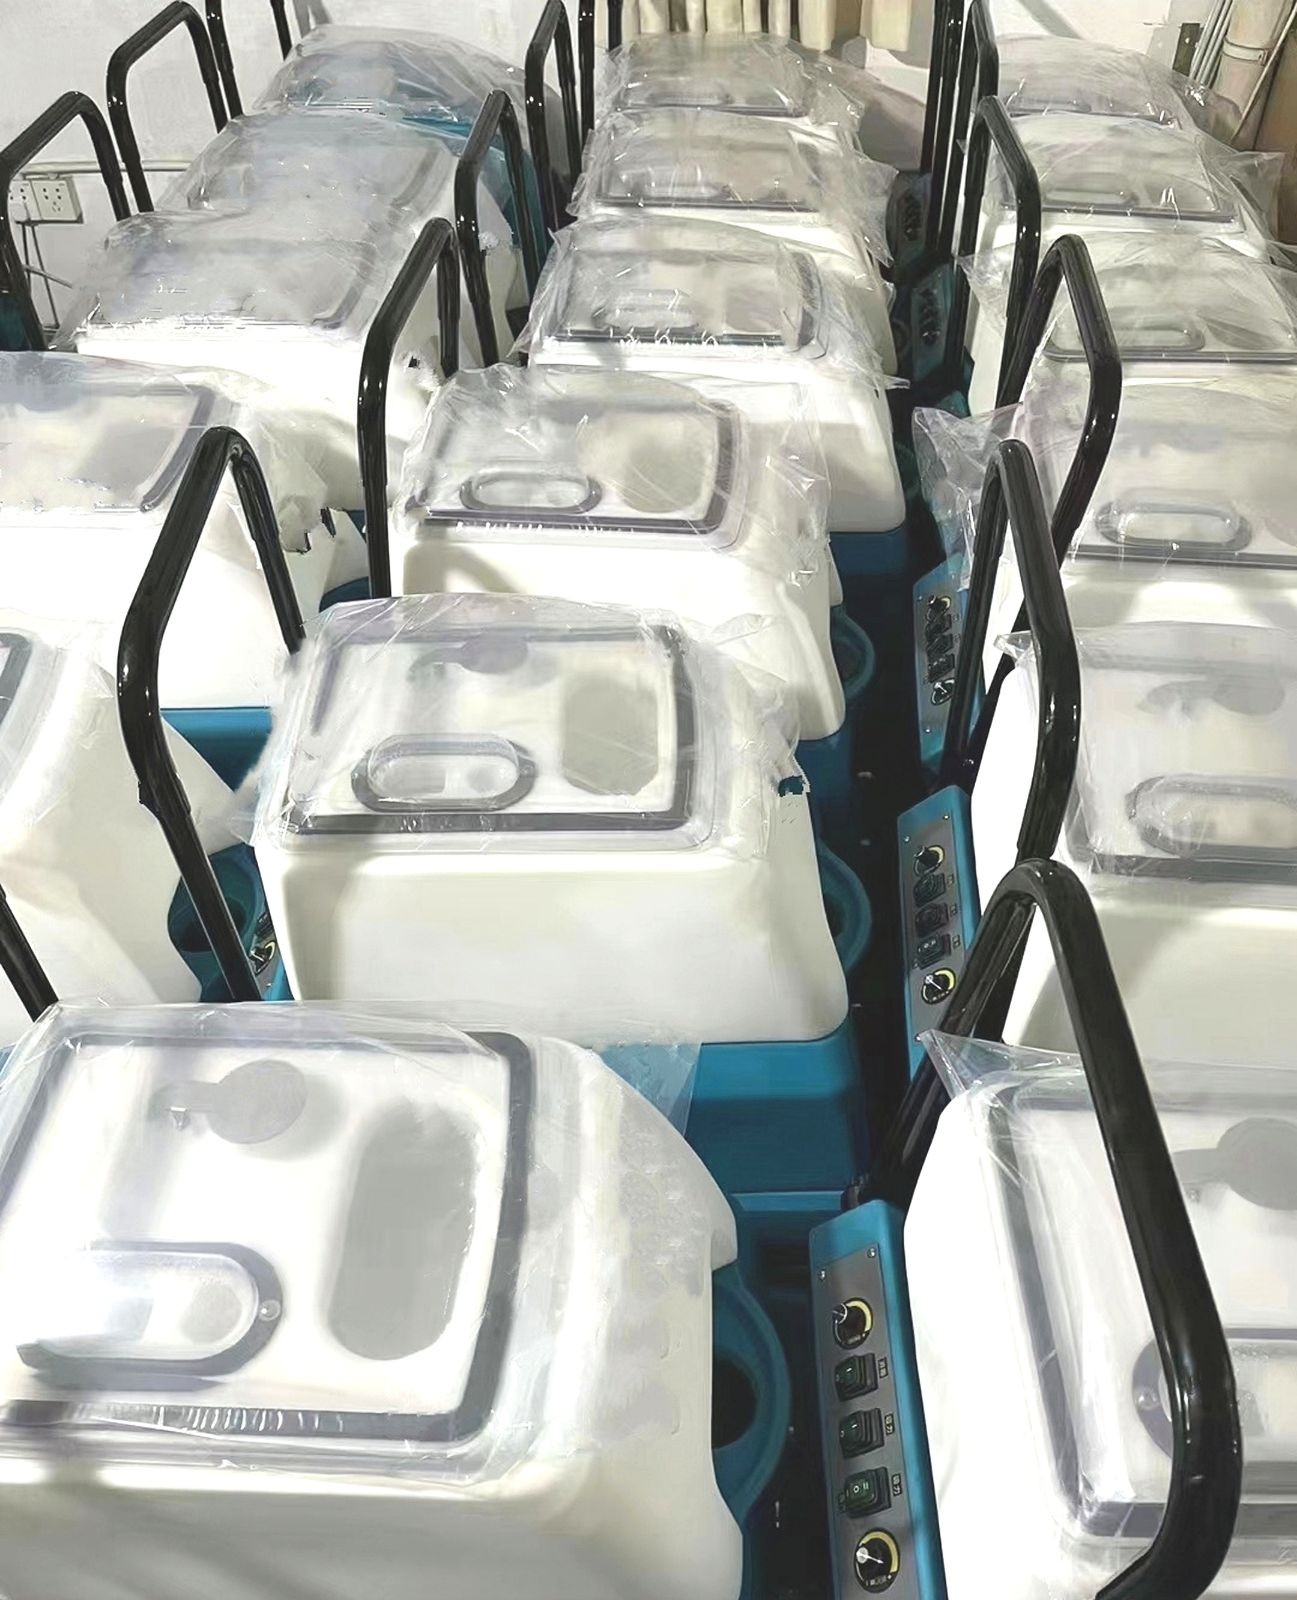 COTV全球直播-杭州净赢环保科技有限公司，专业研发生产“除洁仕”系列窗帘清洗机等产品，欢迎大家光临！